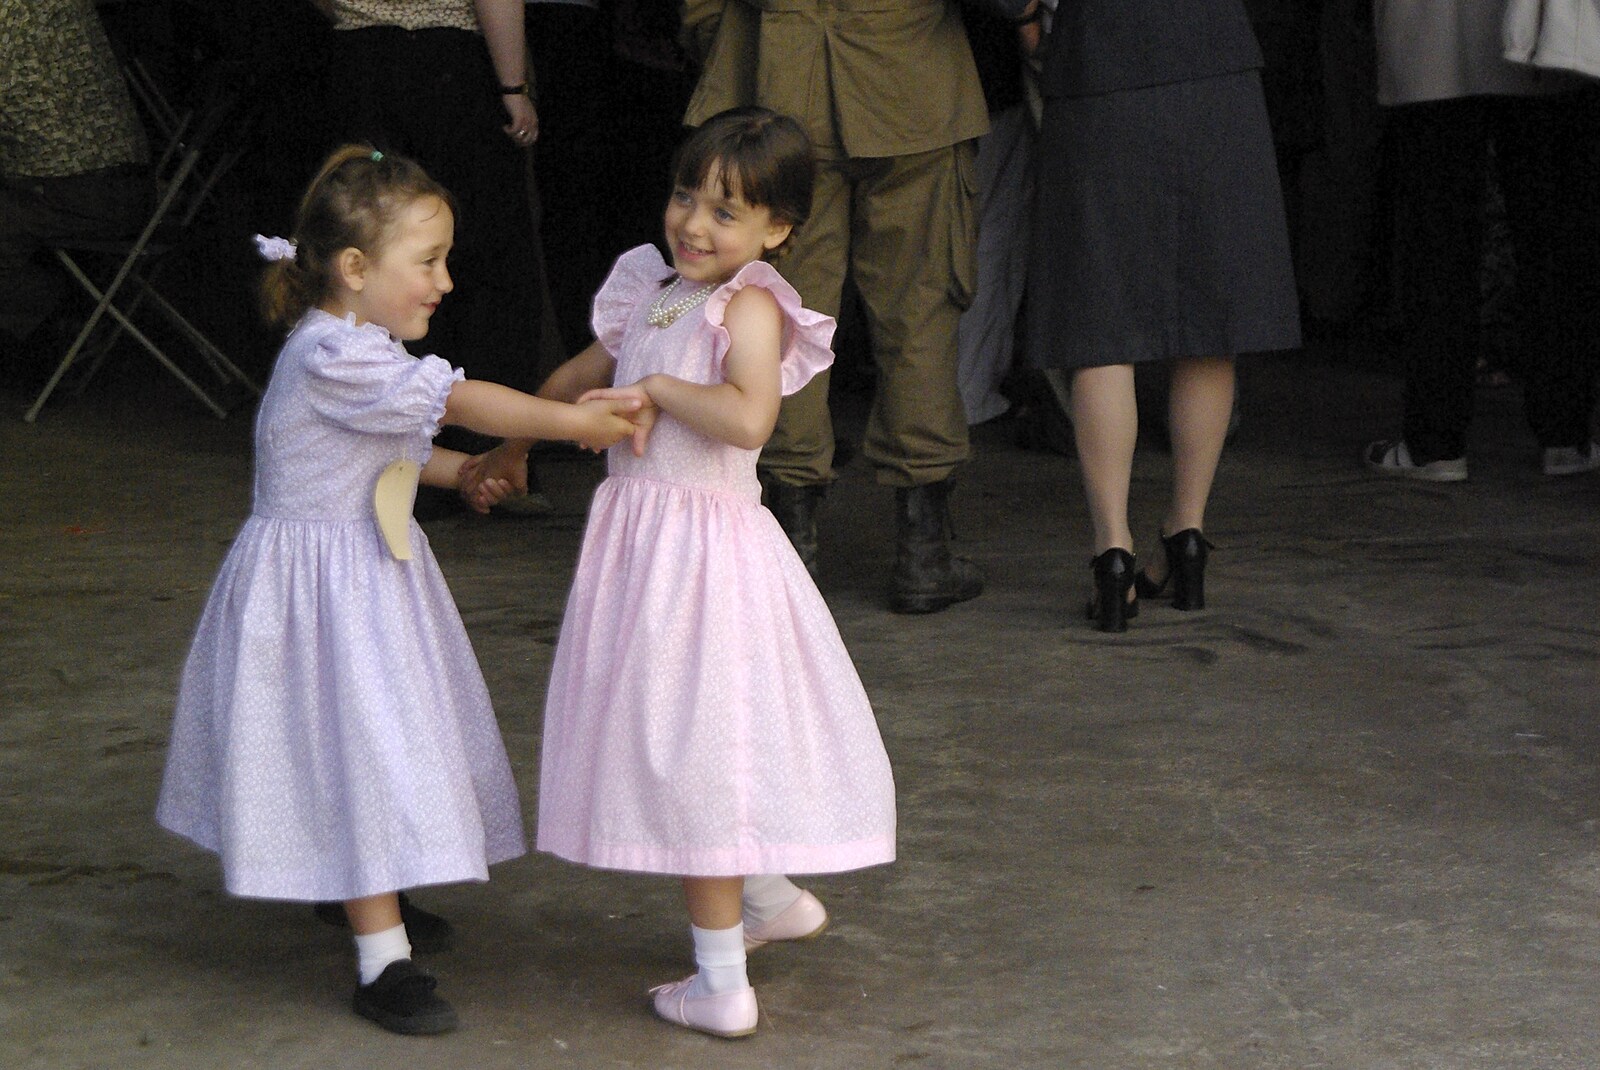 A 1940s Airfield Hangar Dance, Debach, Suffolk - 9th June 2007: A couple of tiny 'evacuees' dance around